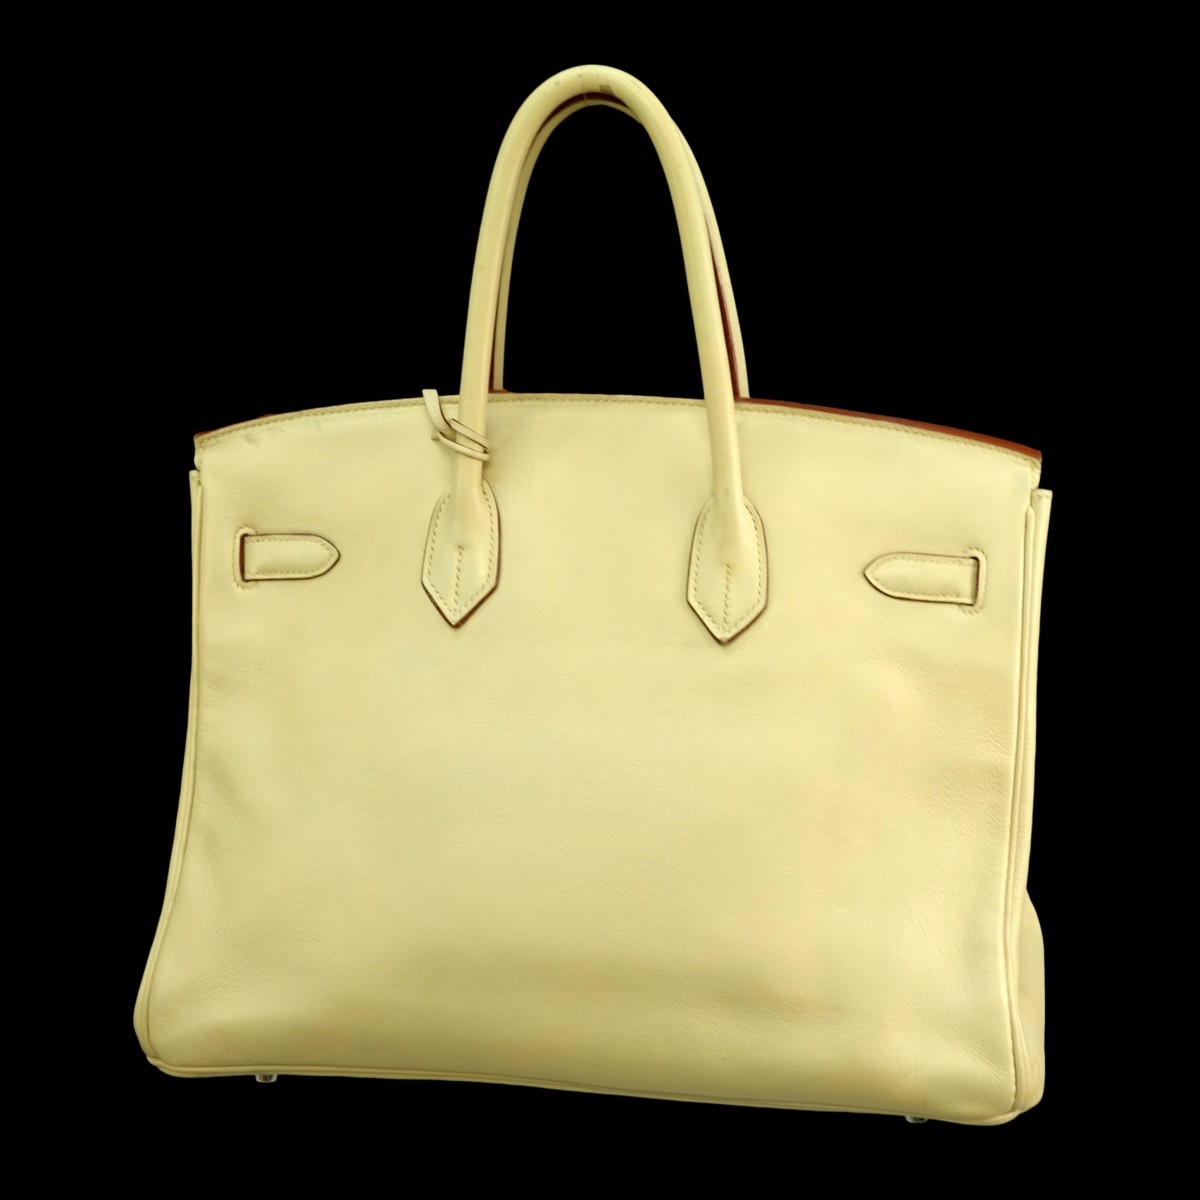 Hermès Birkin 35 Natural Handbag